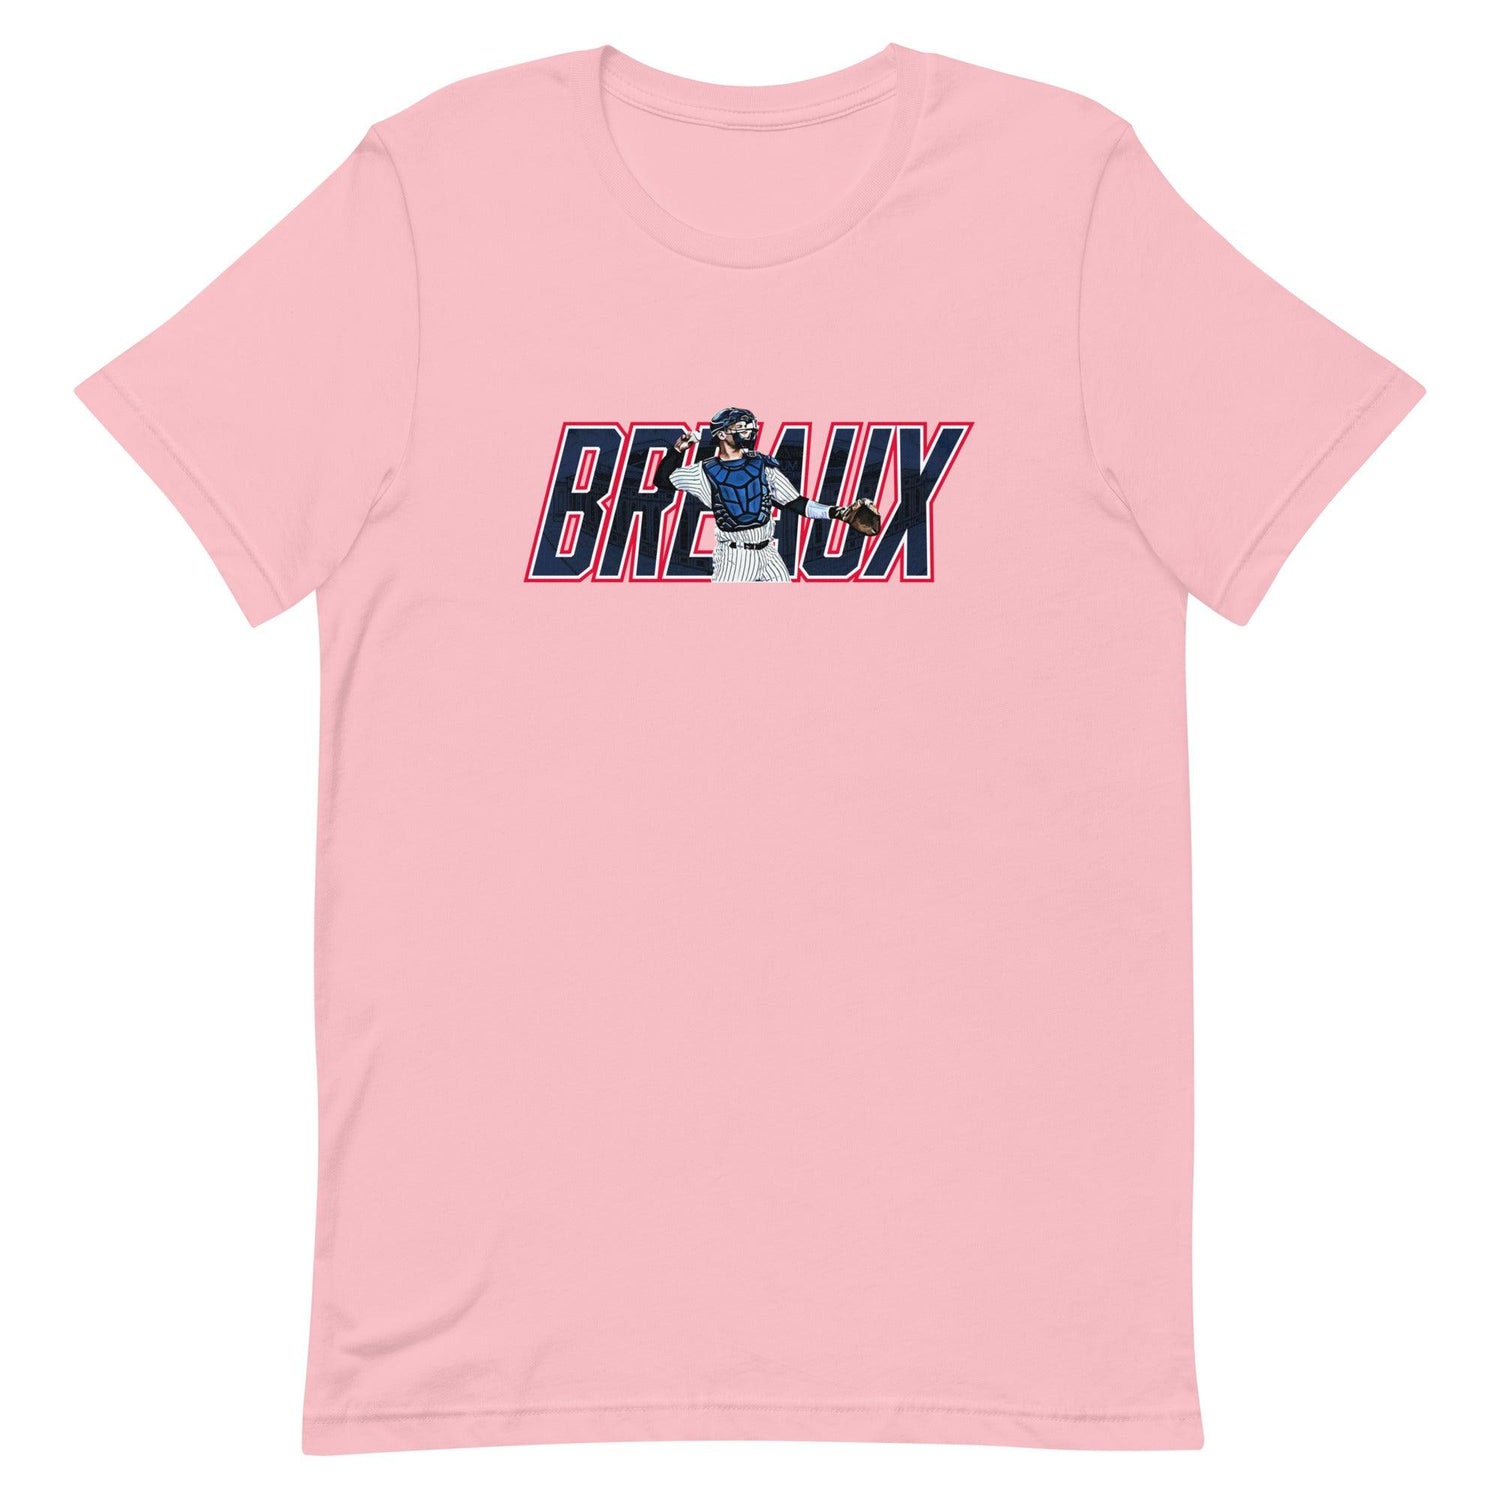 Josh Breaux "Throwback" t-shirt - Fan Arch